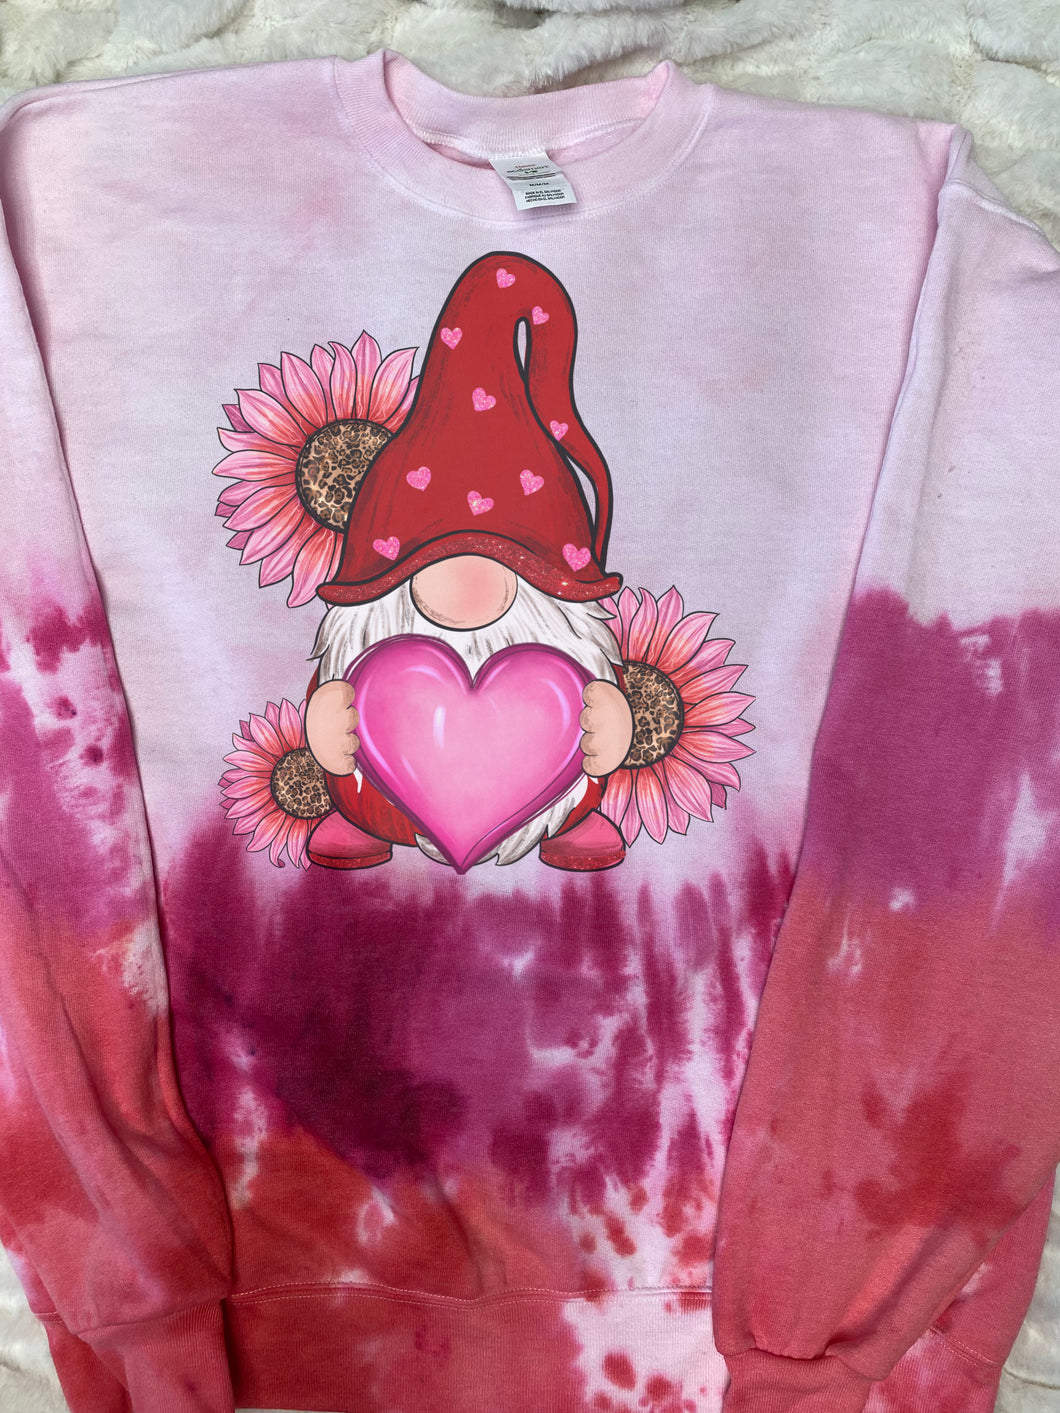 Gnome & Heart sweatshirt